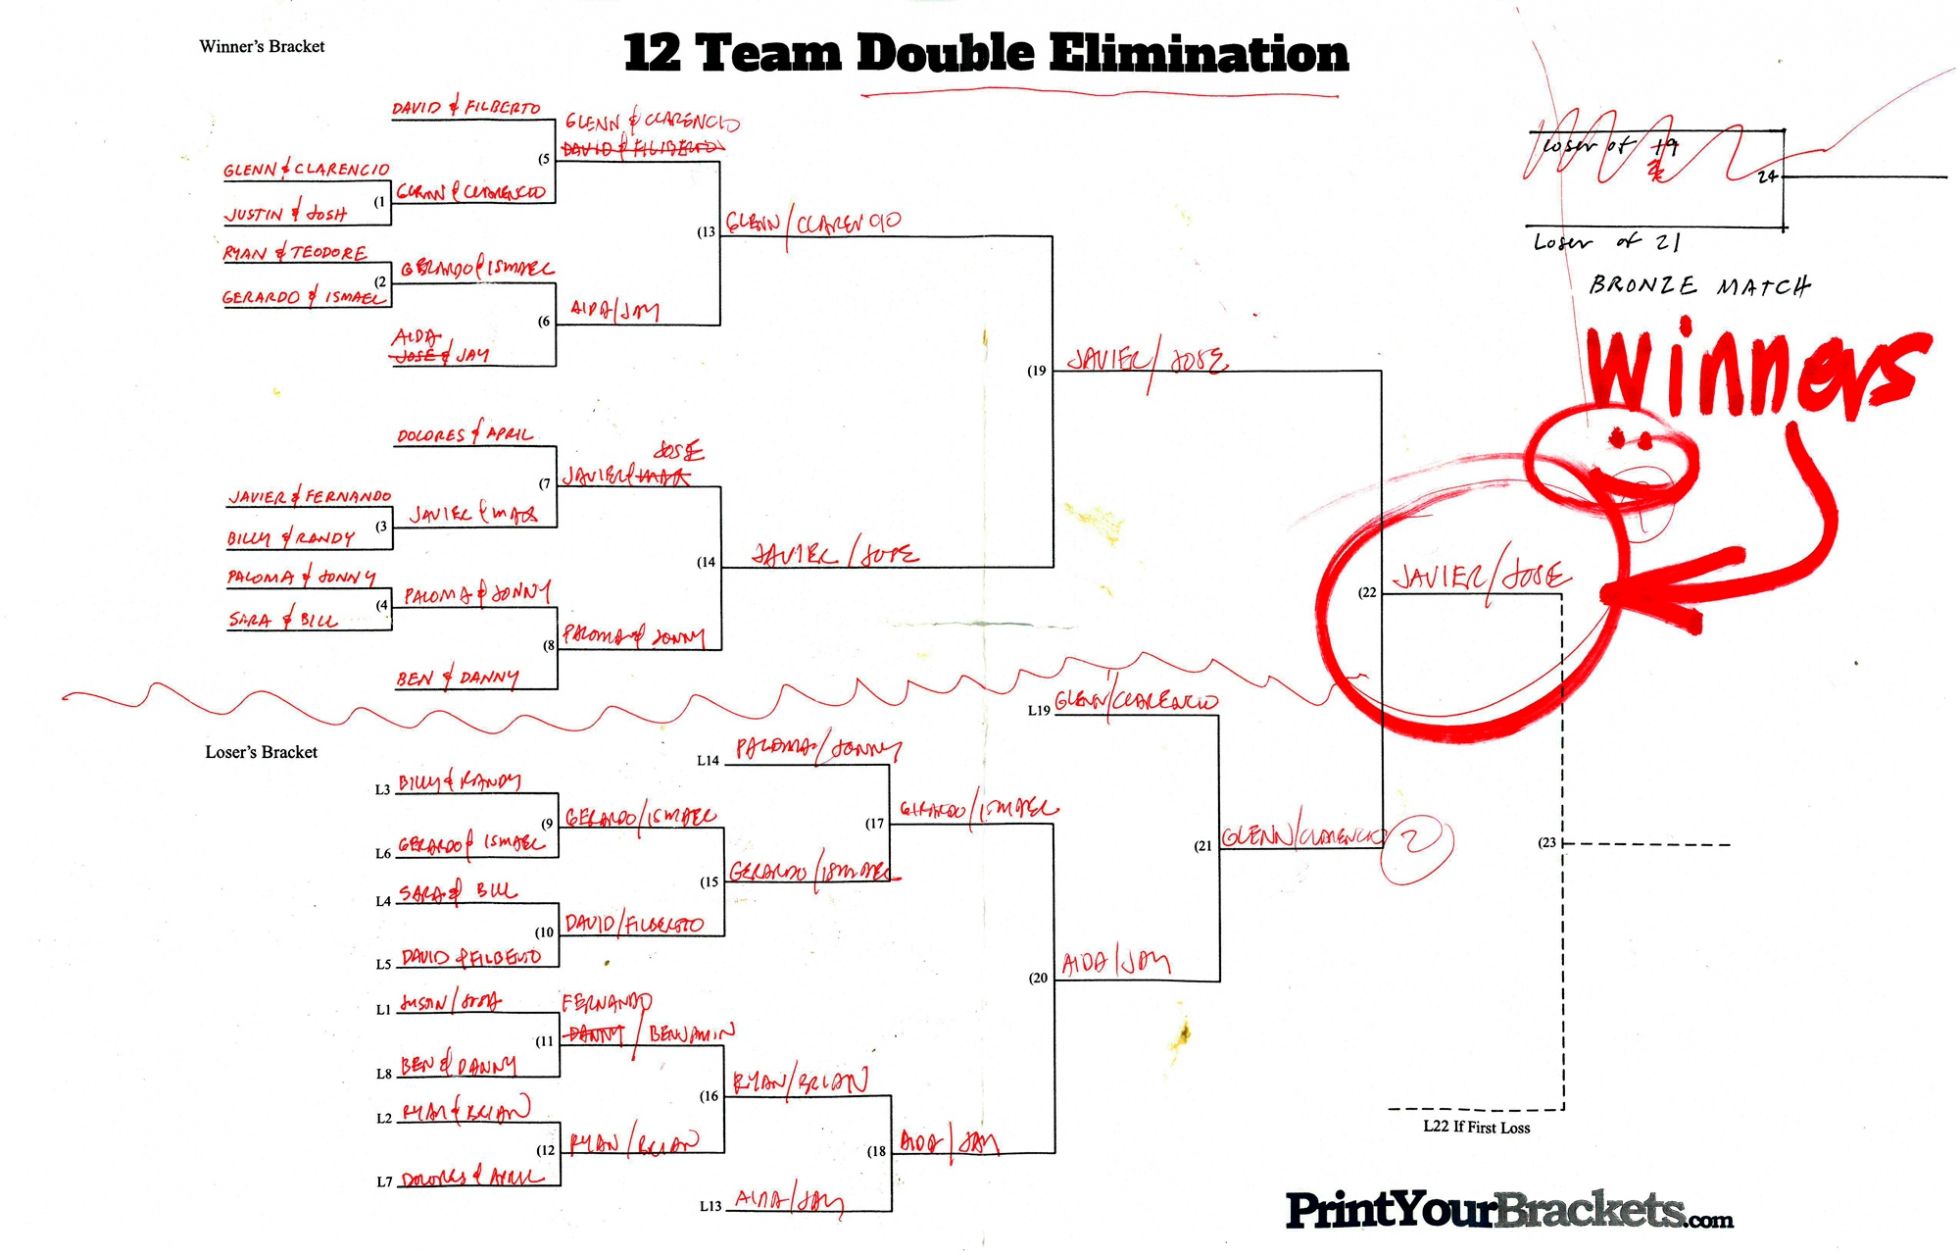 12 Team Double Elimination Bracket